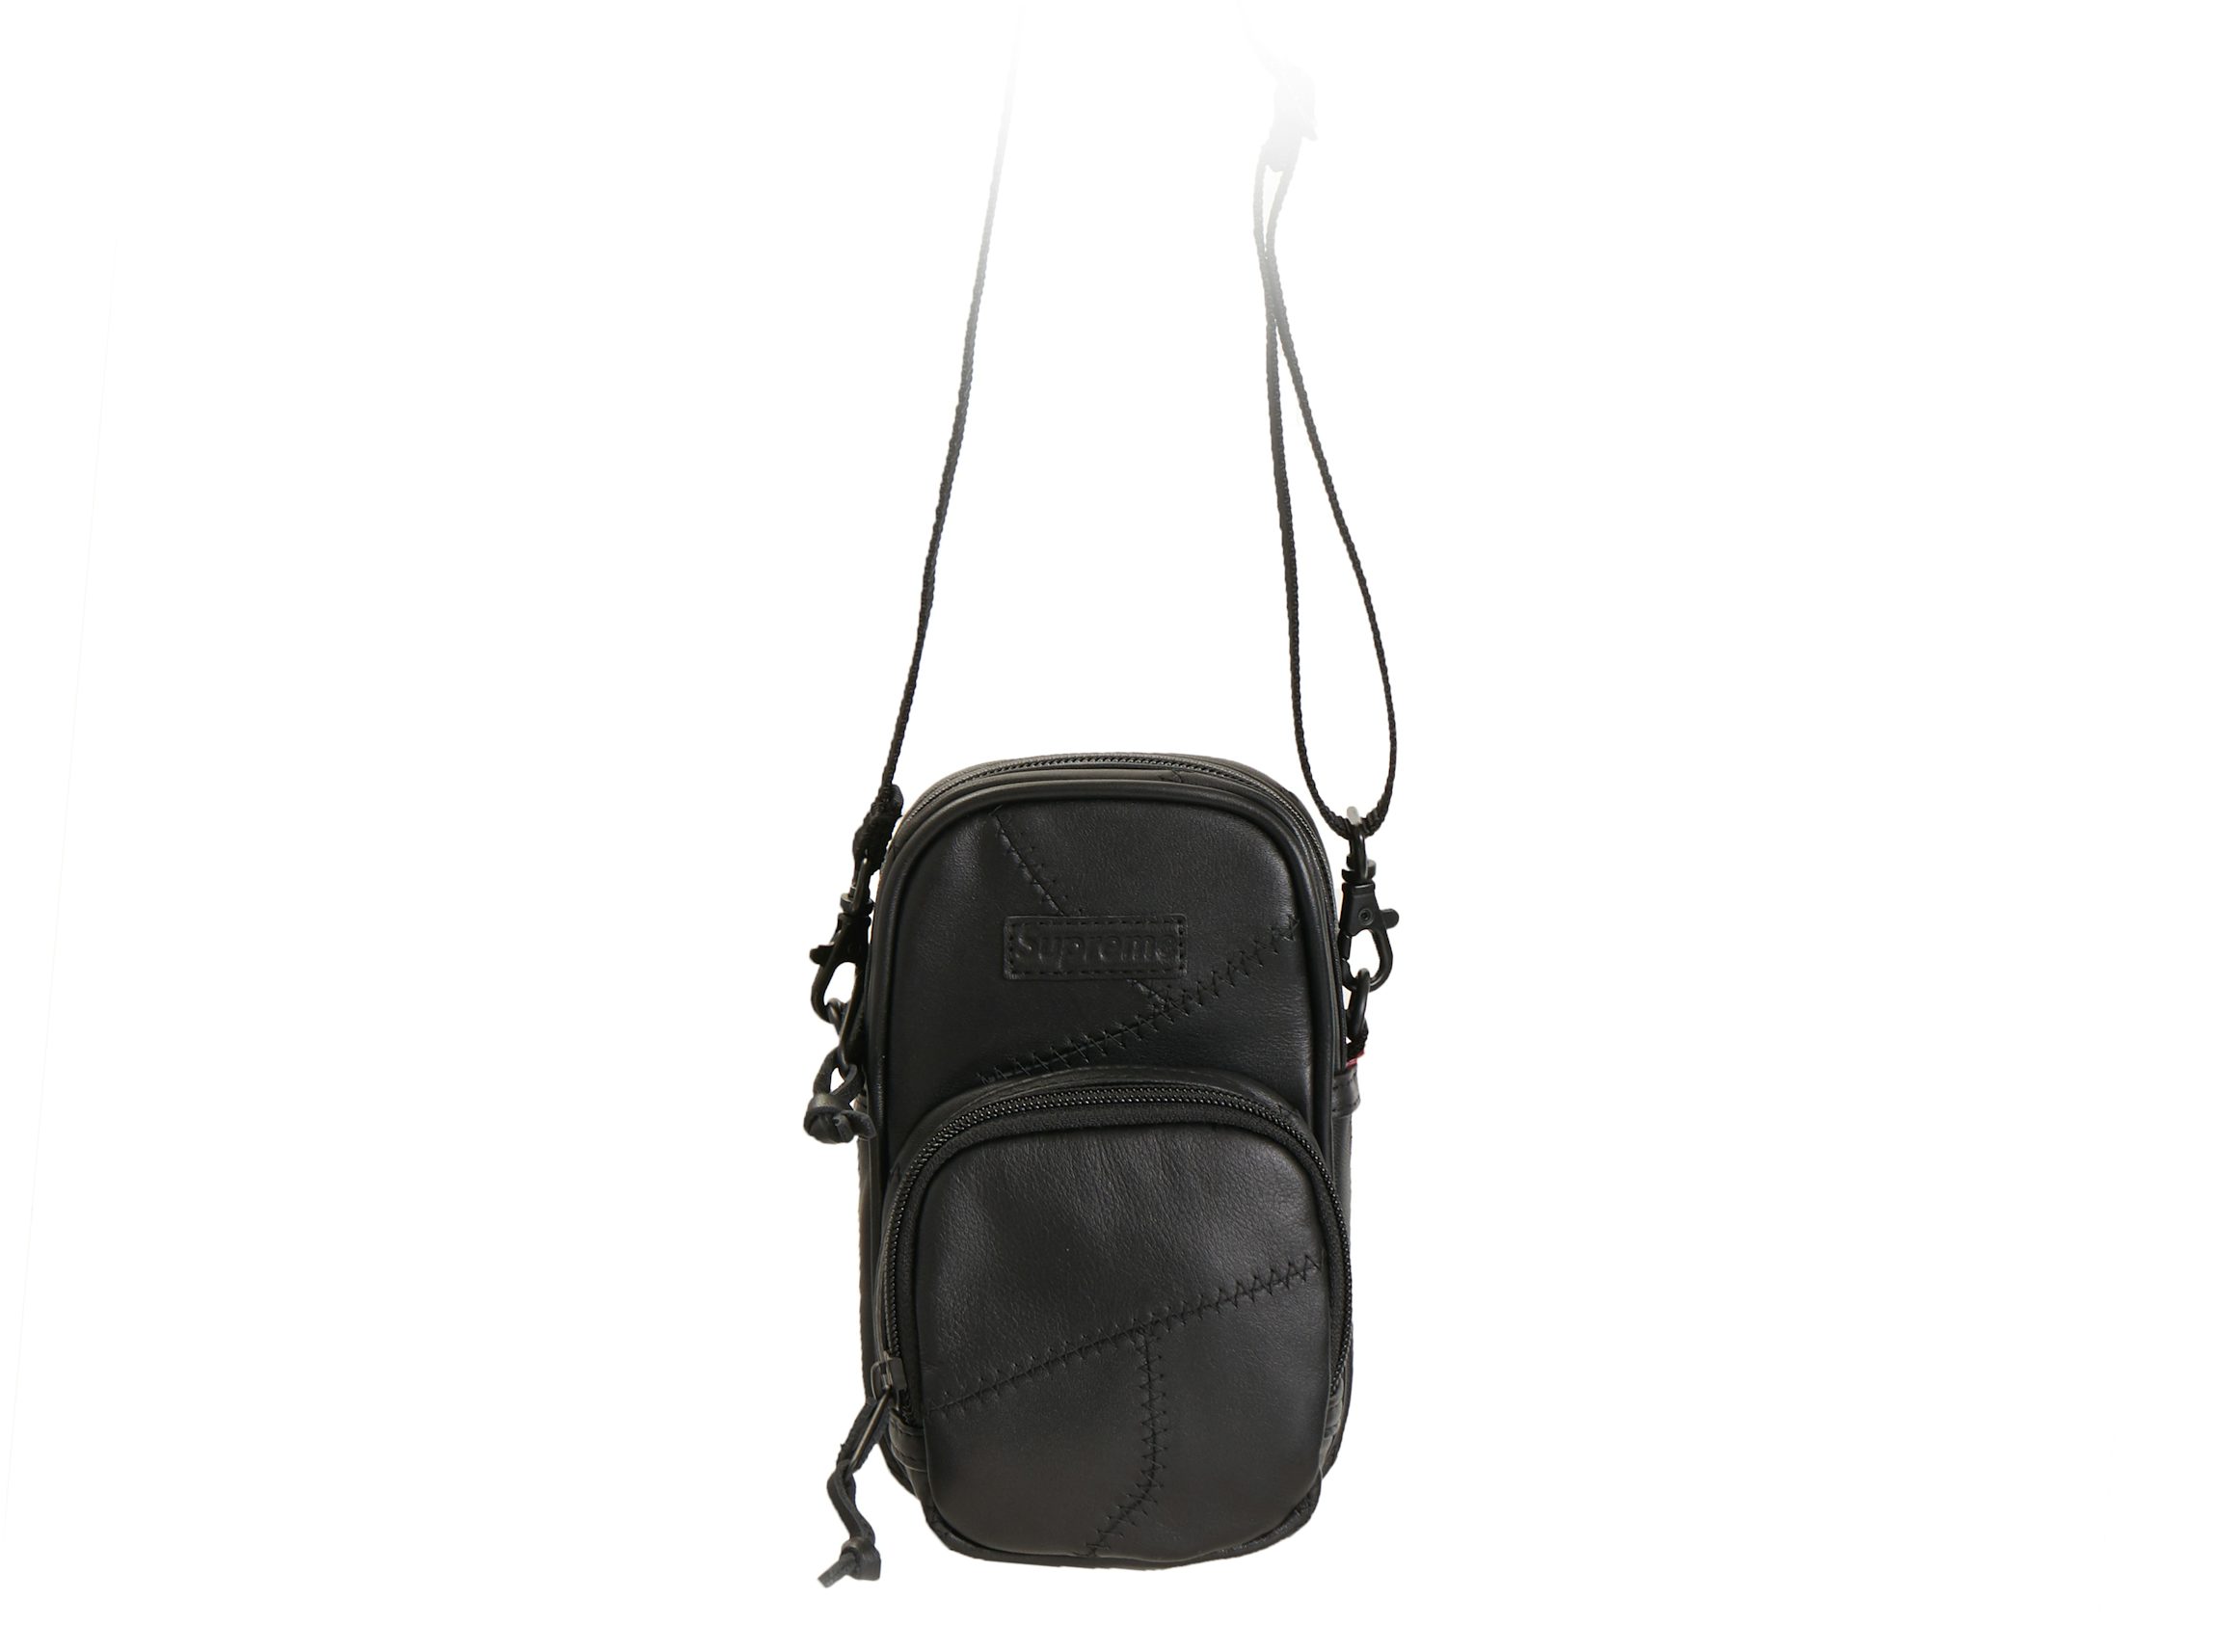 Supreme Patchwork Leather Duffel Bag Black